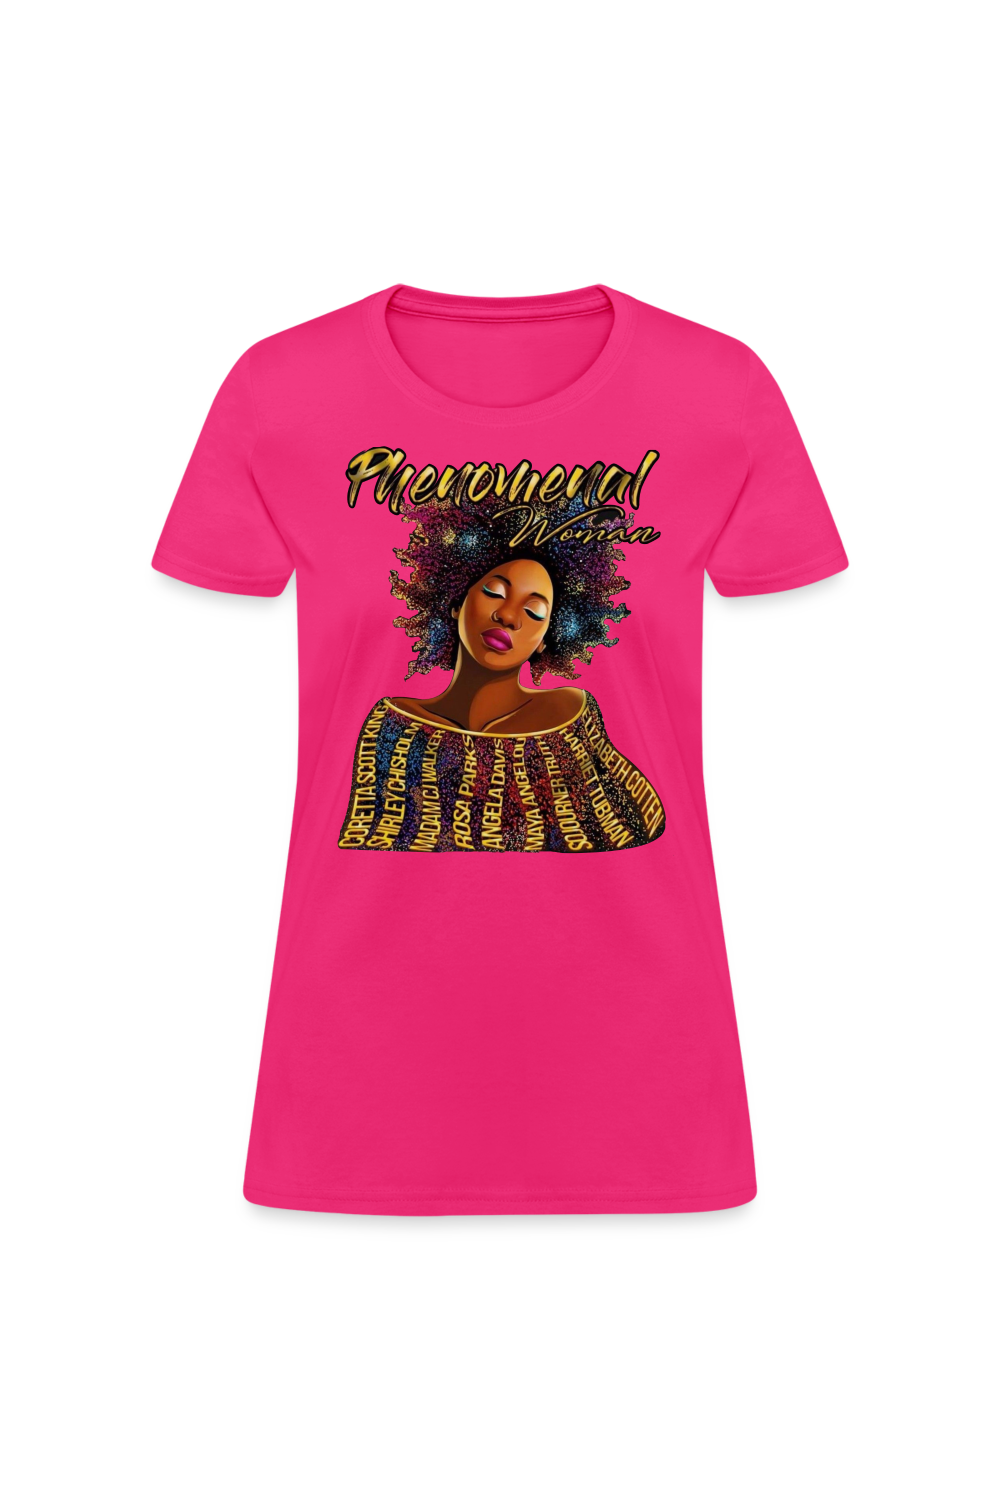 African American Women's Phenomenal Woman Short Sleeve T-Shirt - fuchsia